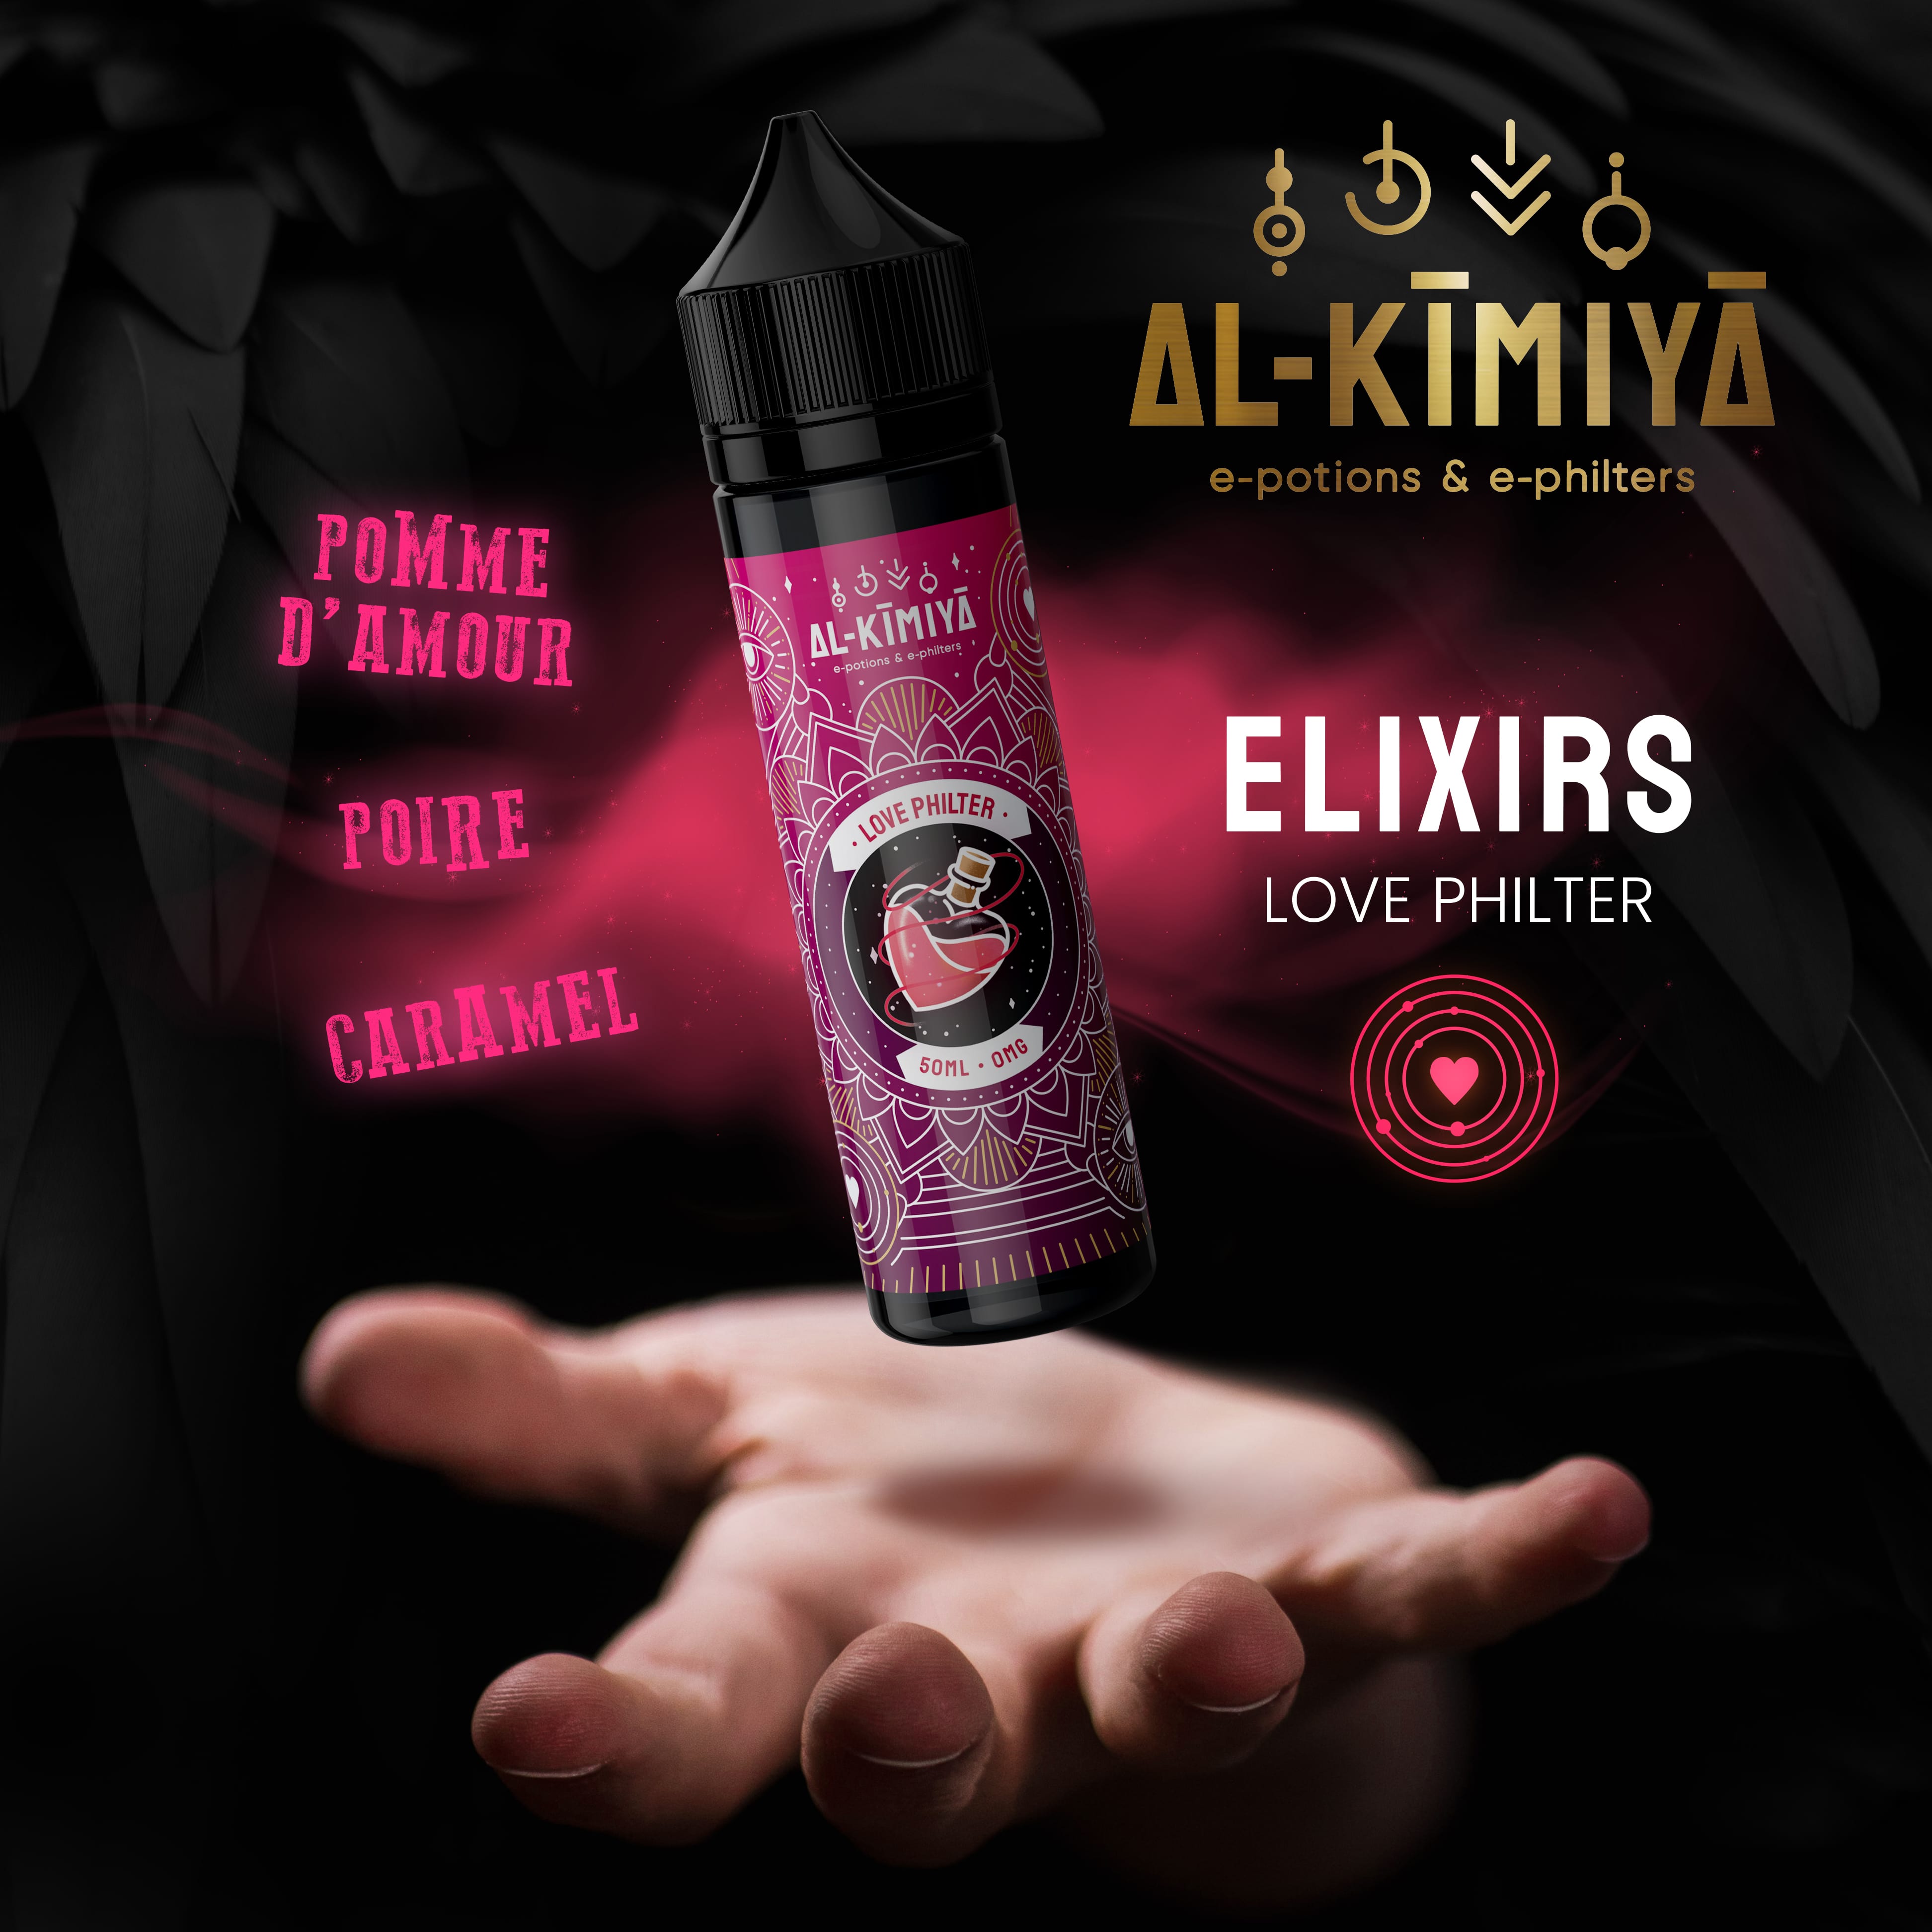 E-LIQUIDES AL-KIMIYA LOVE PHILTER